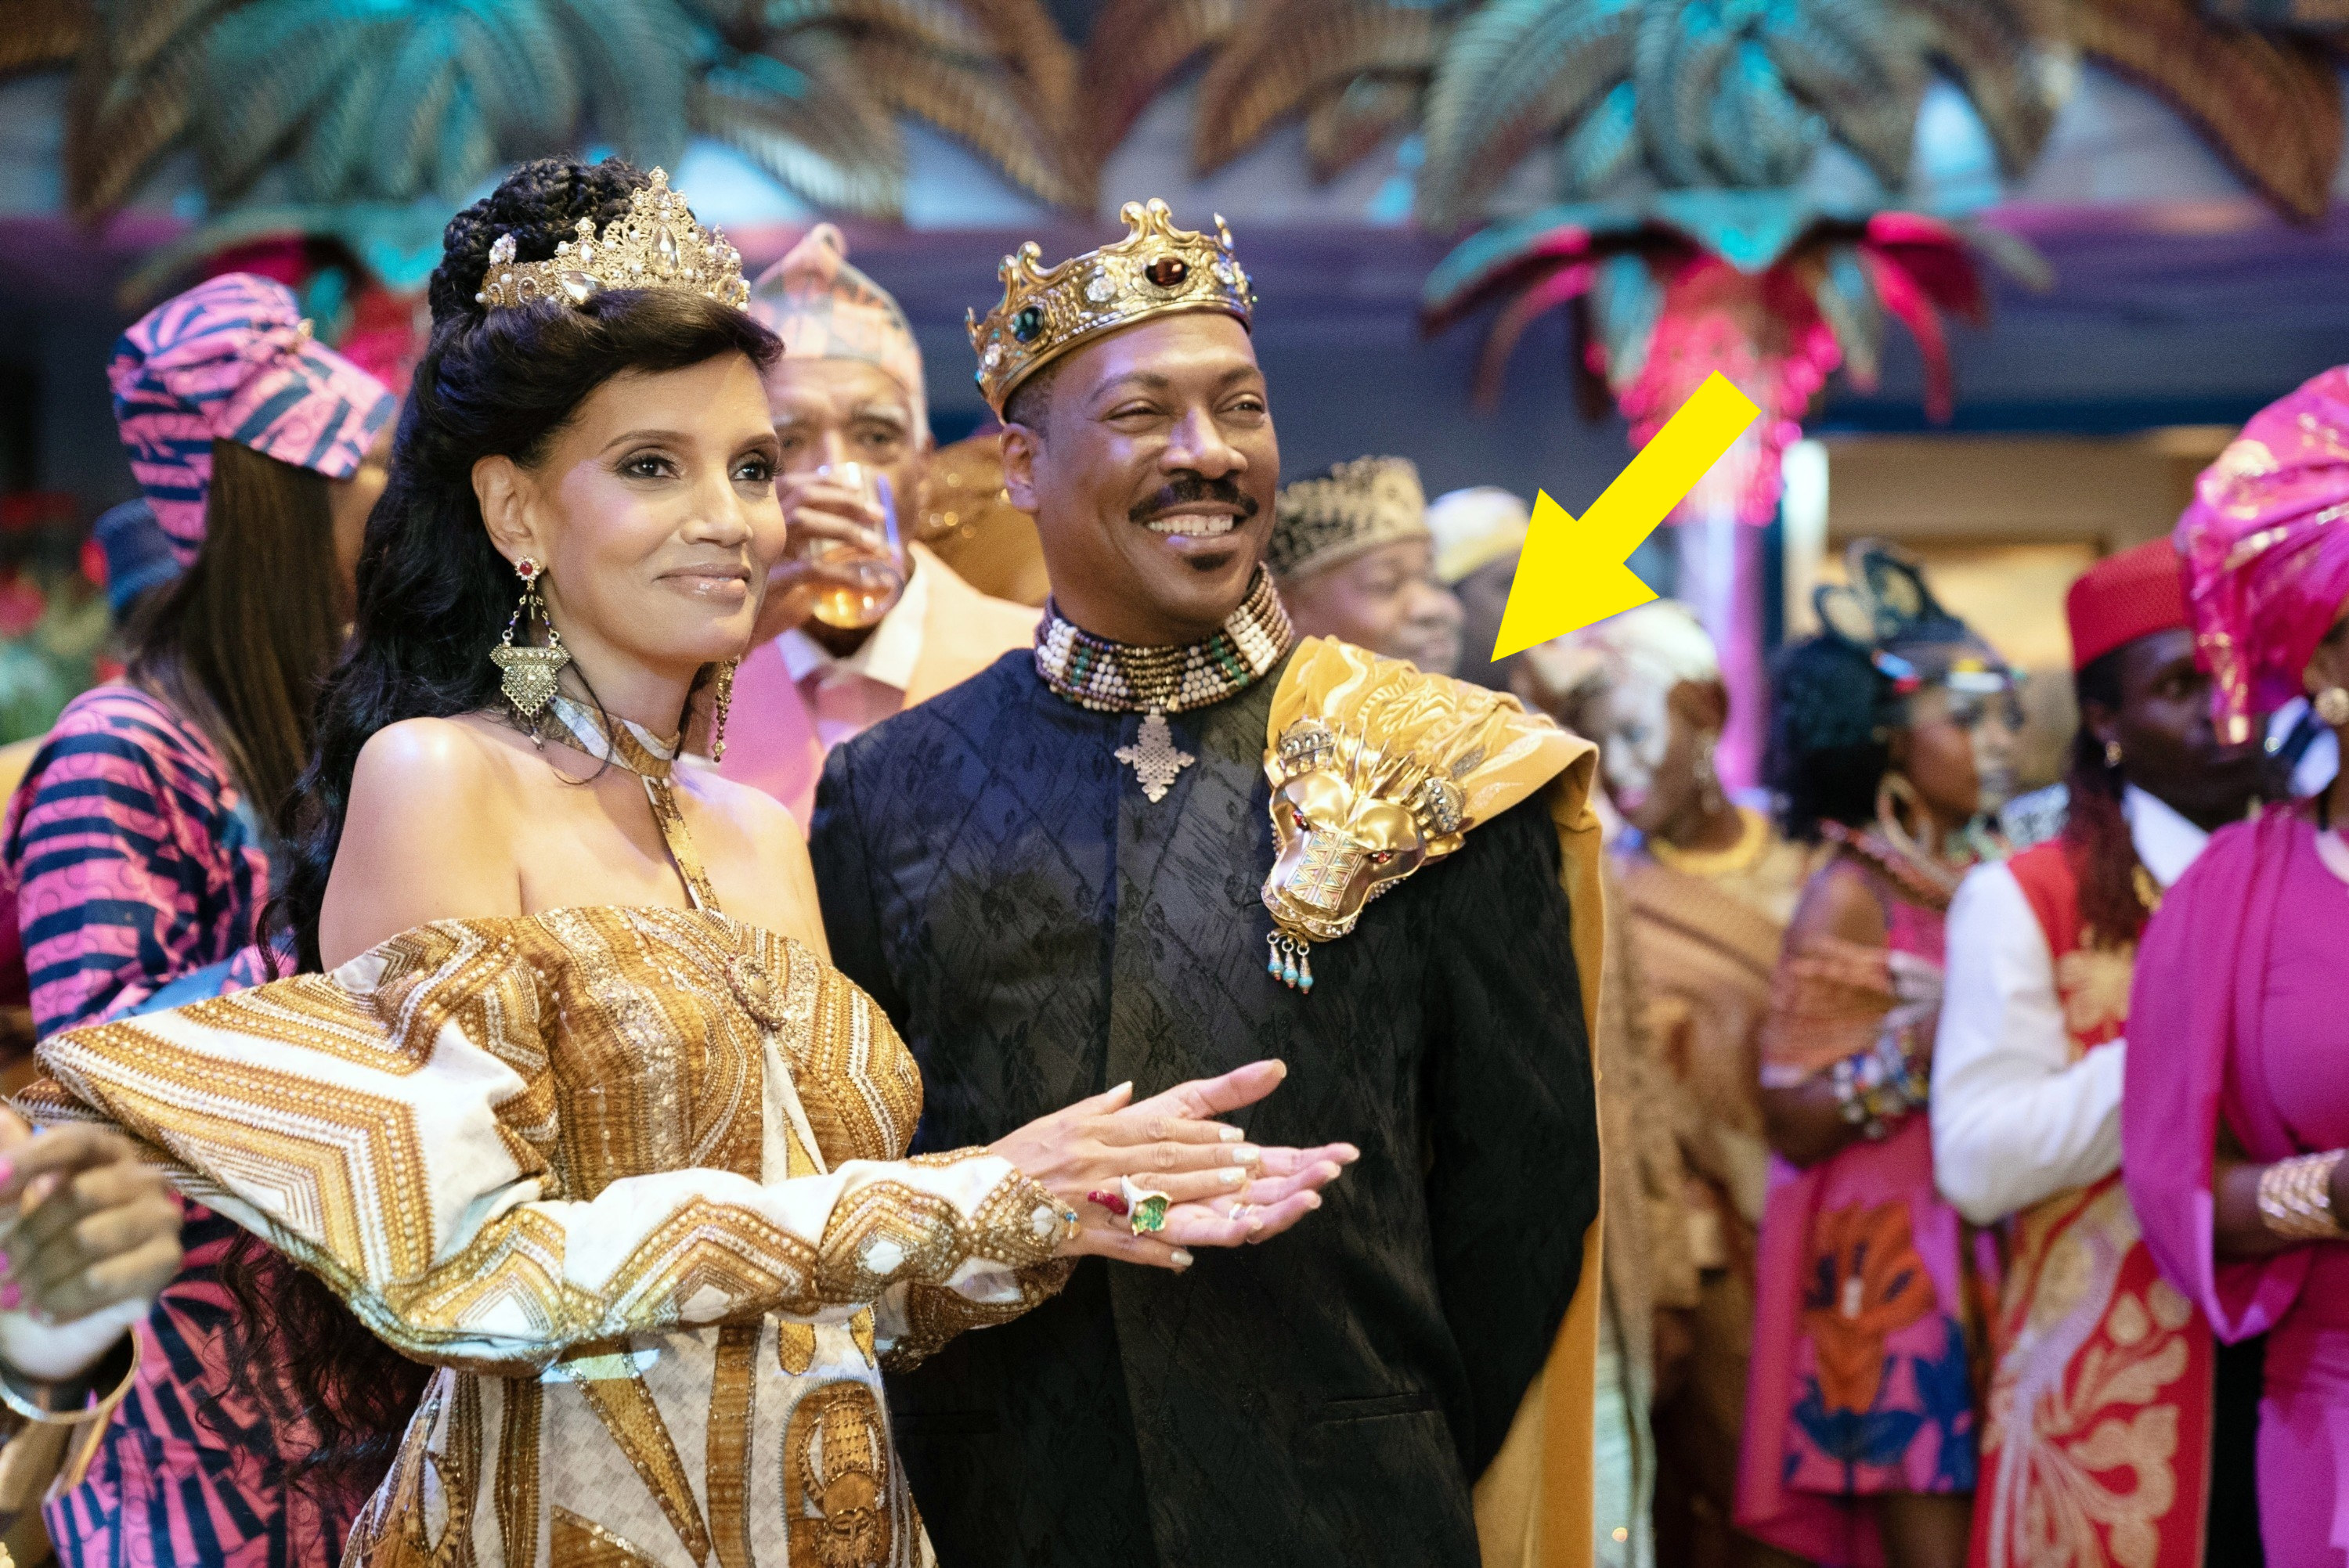 Prince Akeem wearing the golden lion shoulder accessory